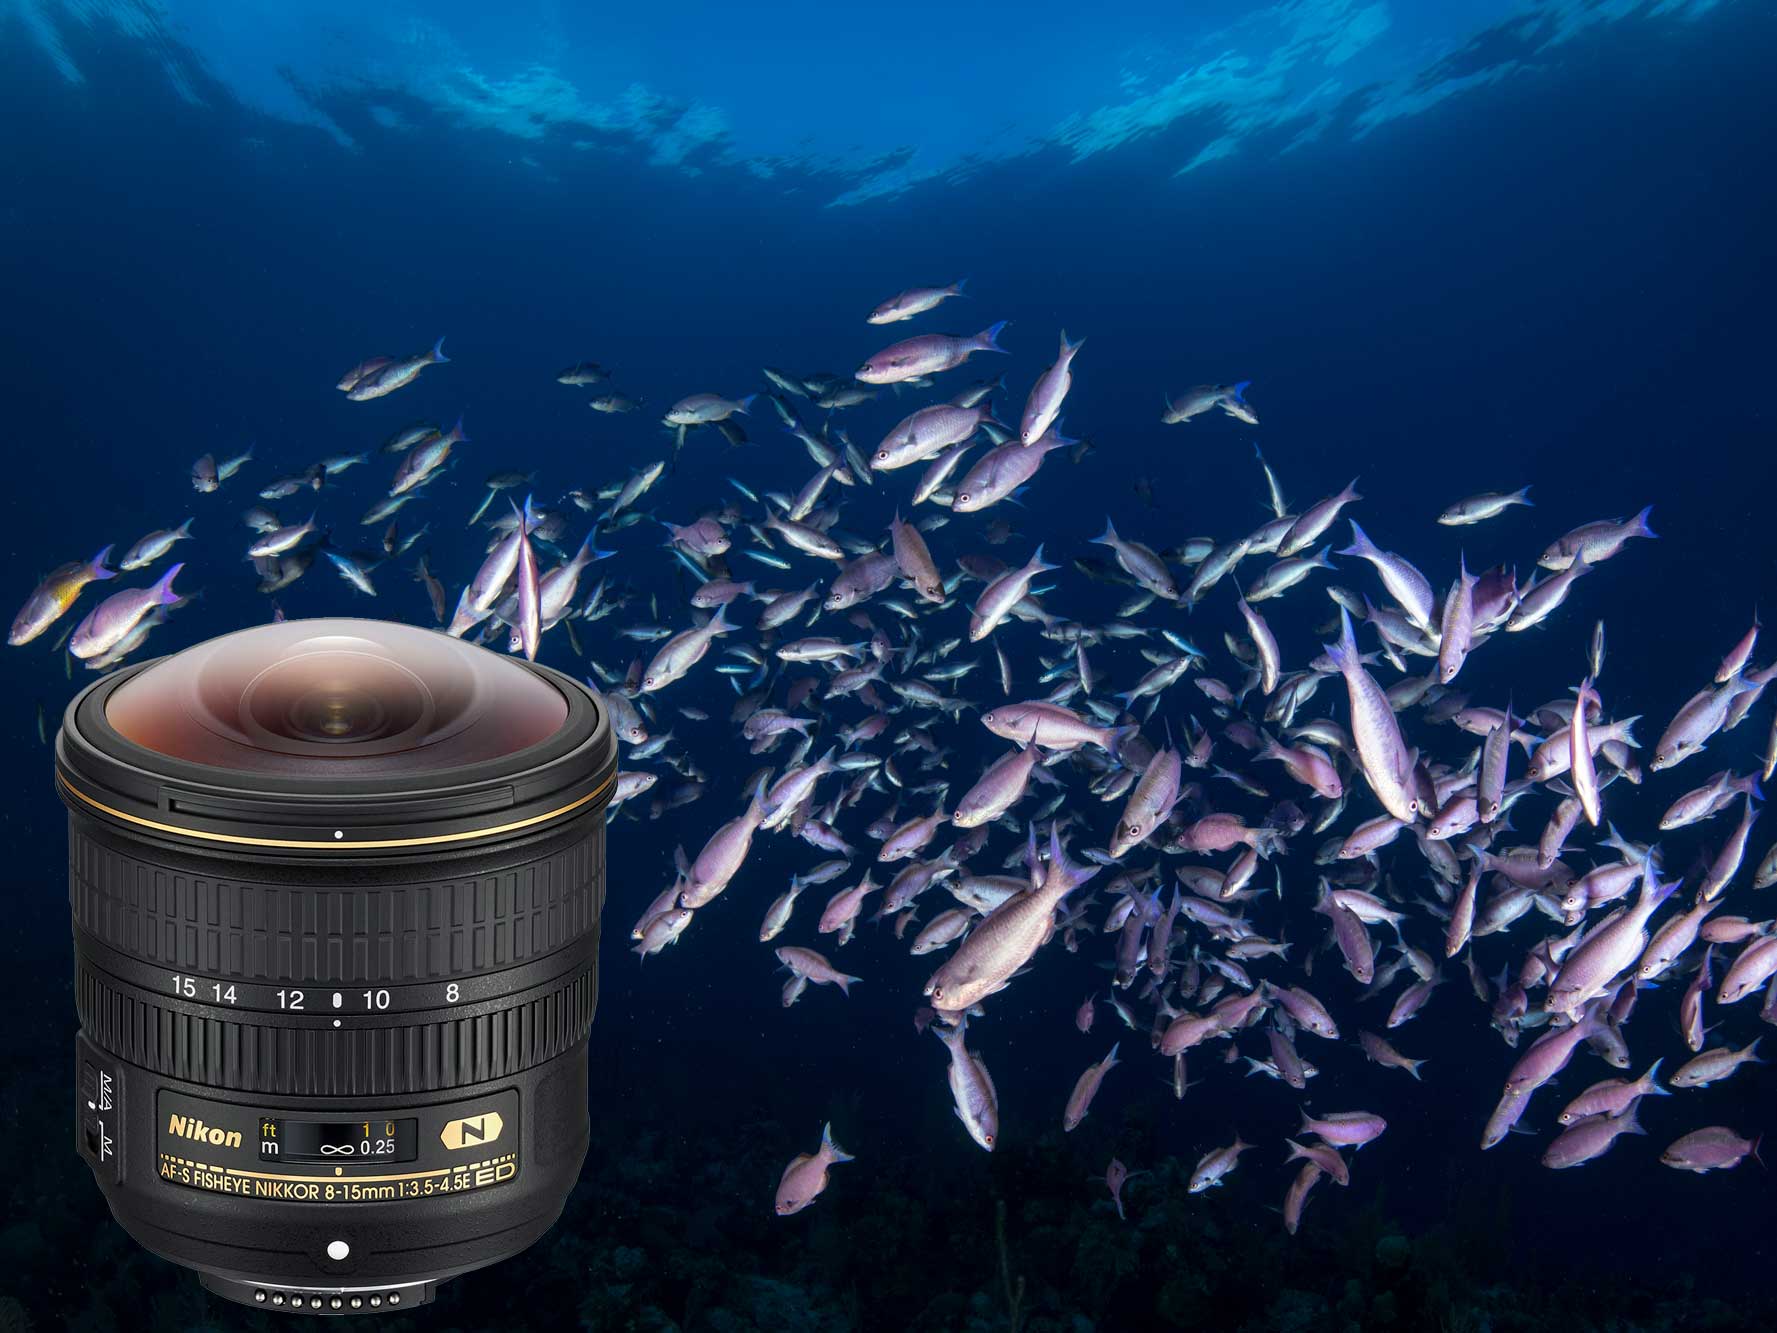 Nikon 8-15mm Fisheye Lens Underwater Photography Review